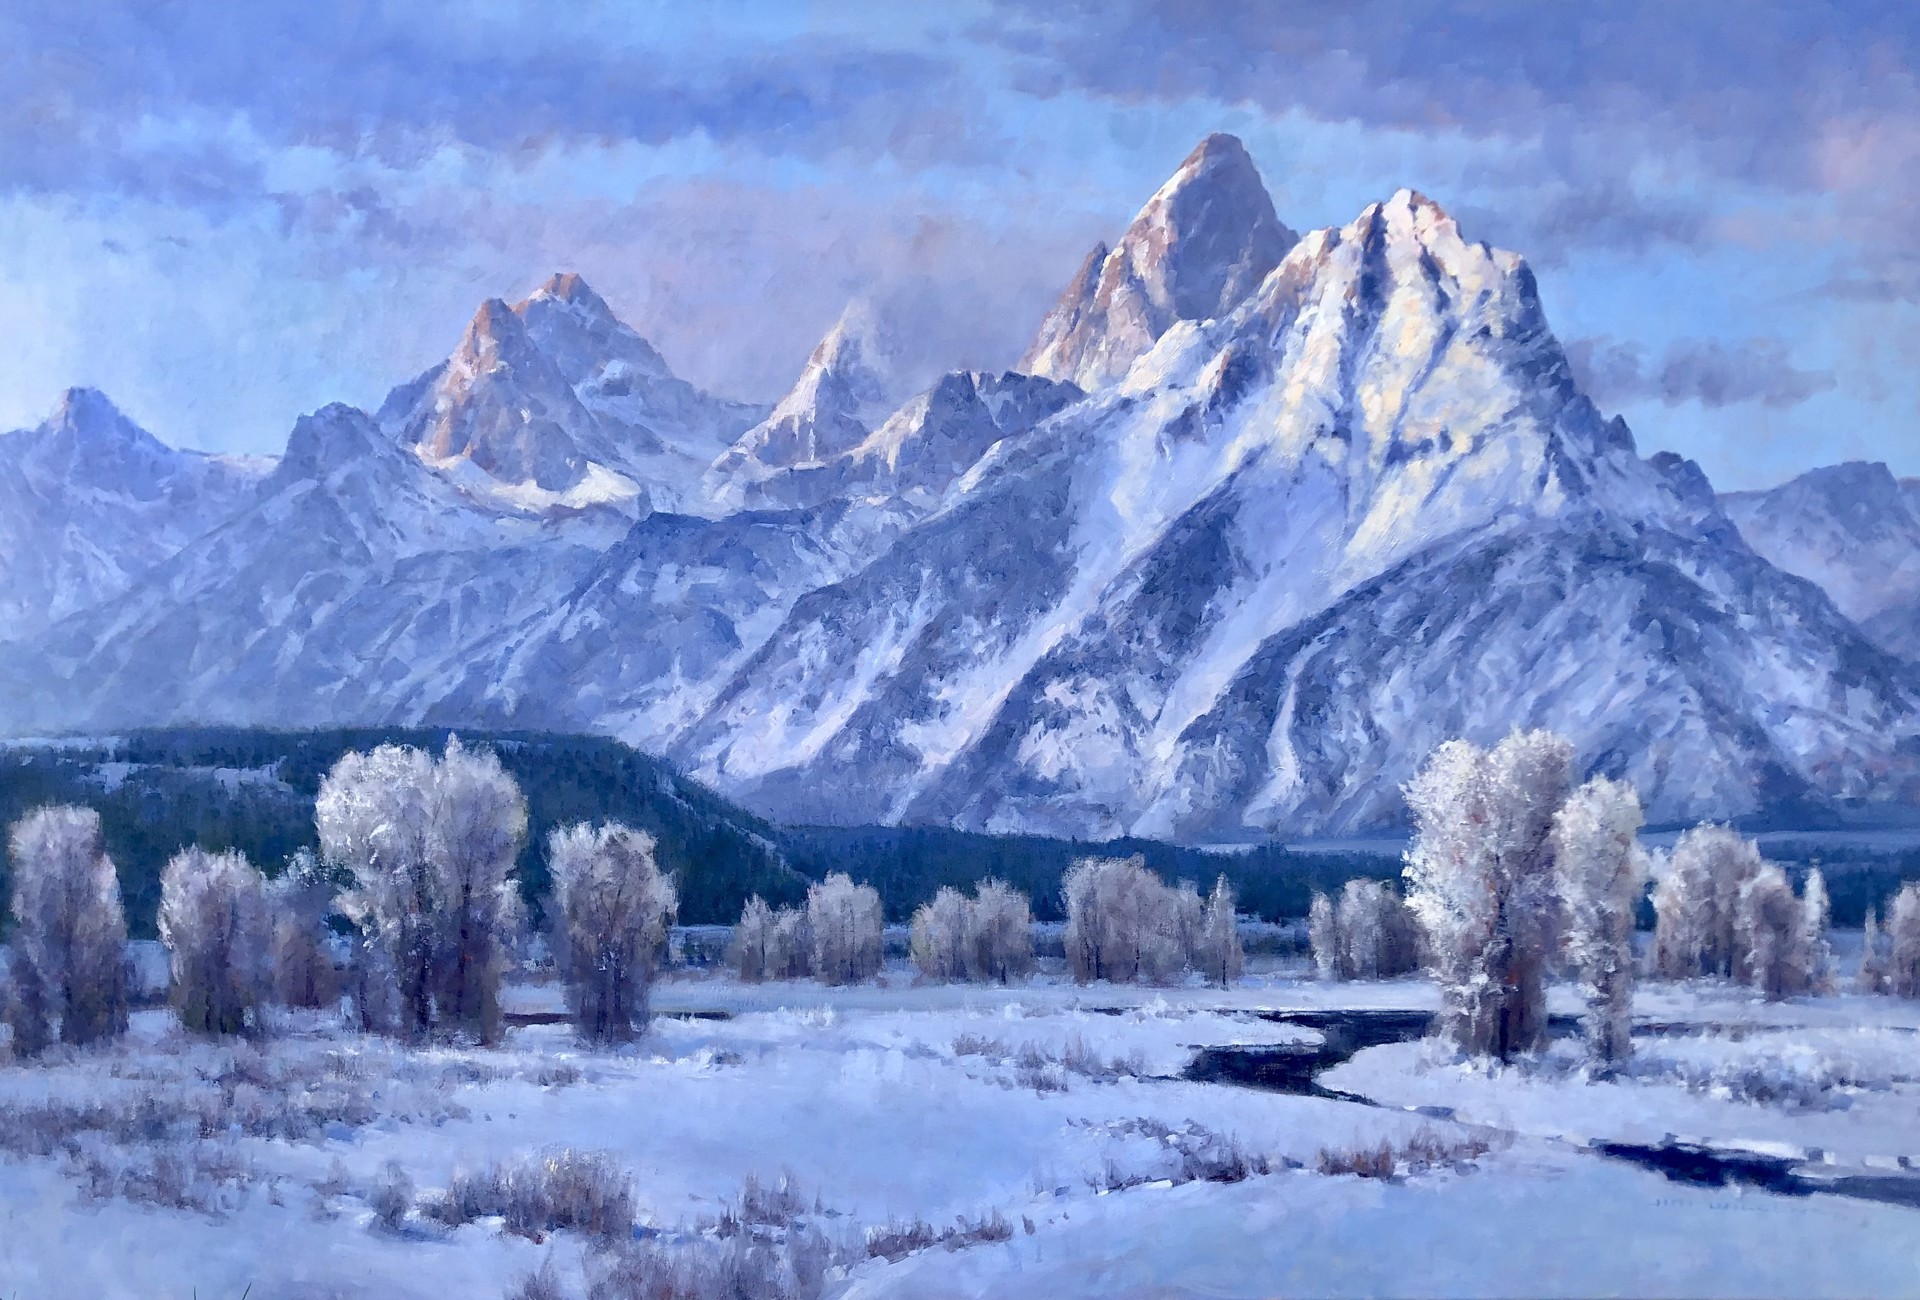 Teton Commission by Jim Wilcox